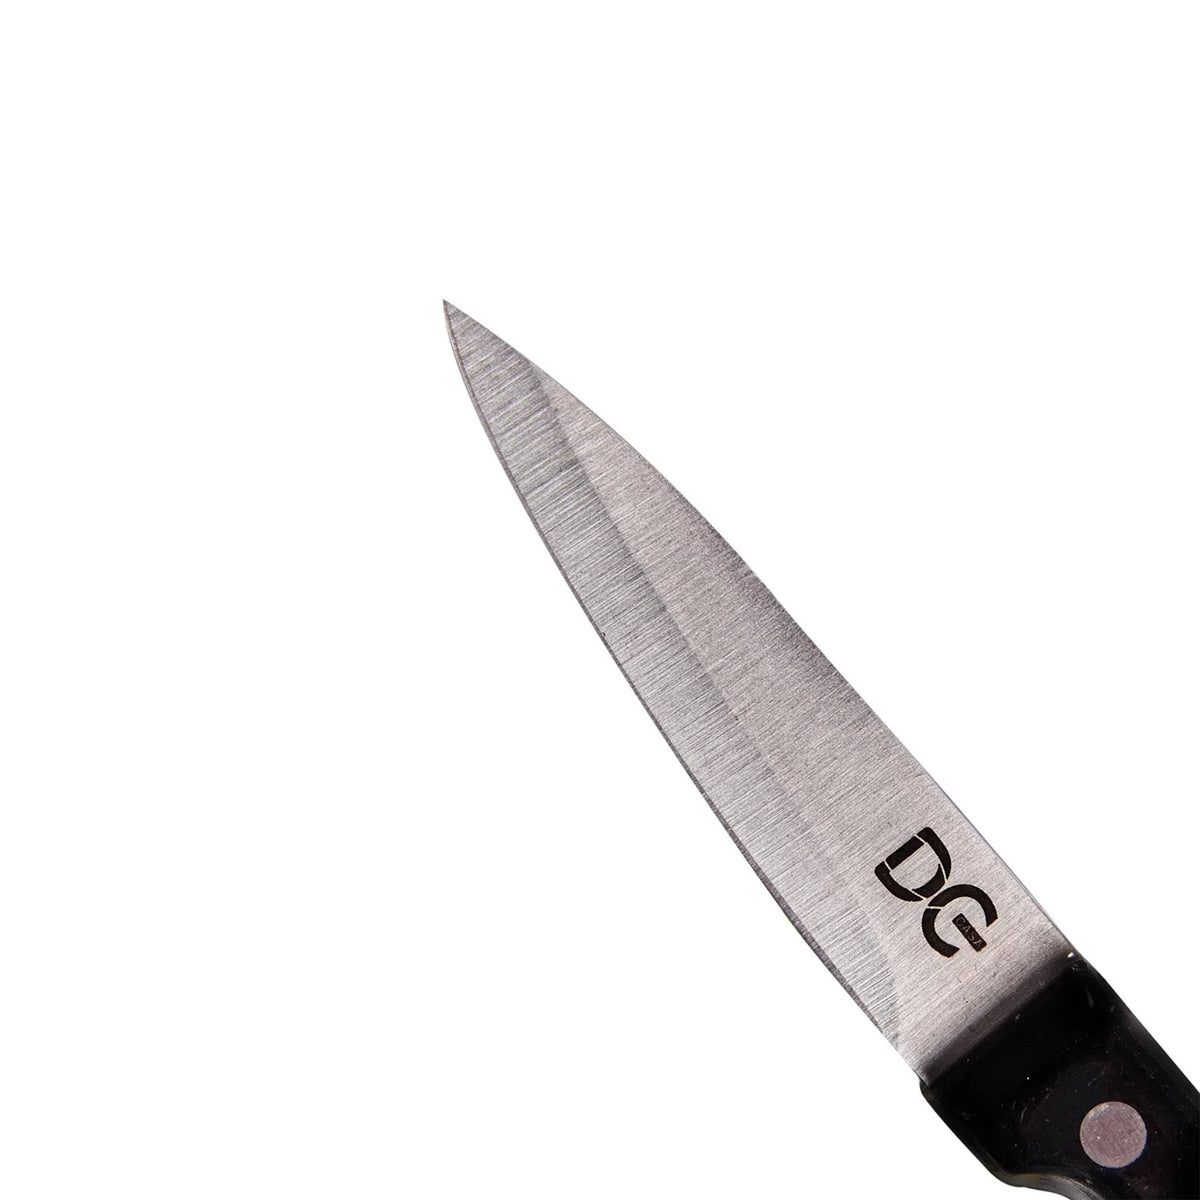 Spelchcchino steel knife with black ergonomic handle - 9cm